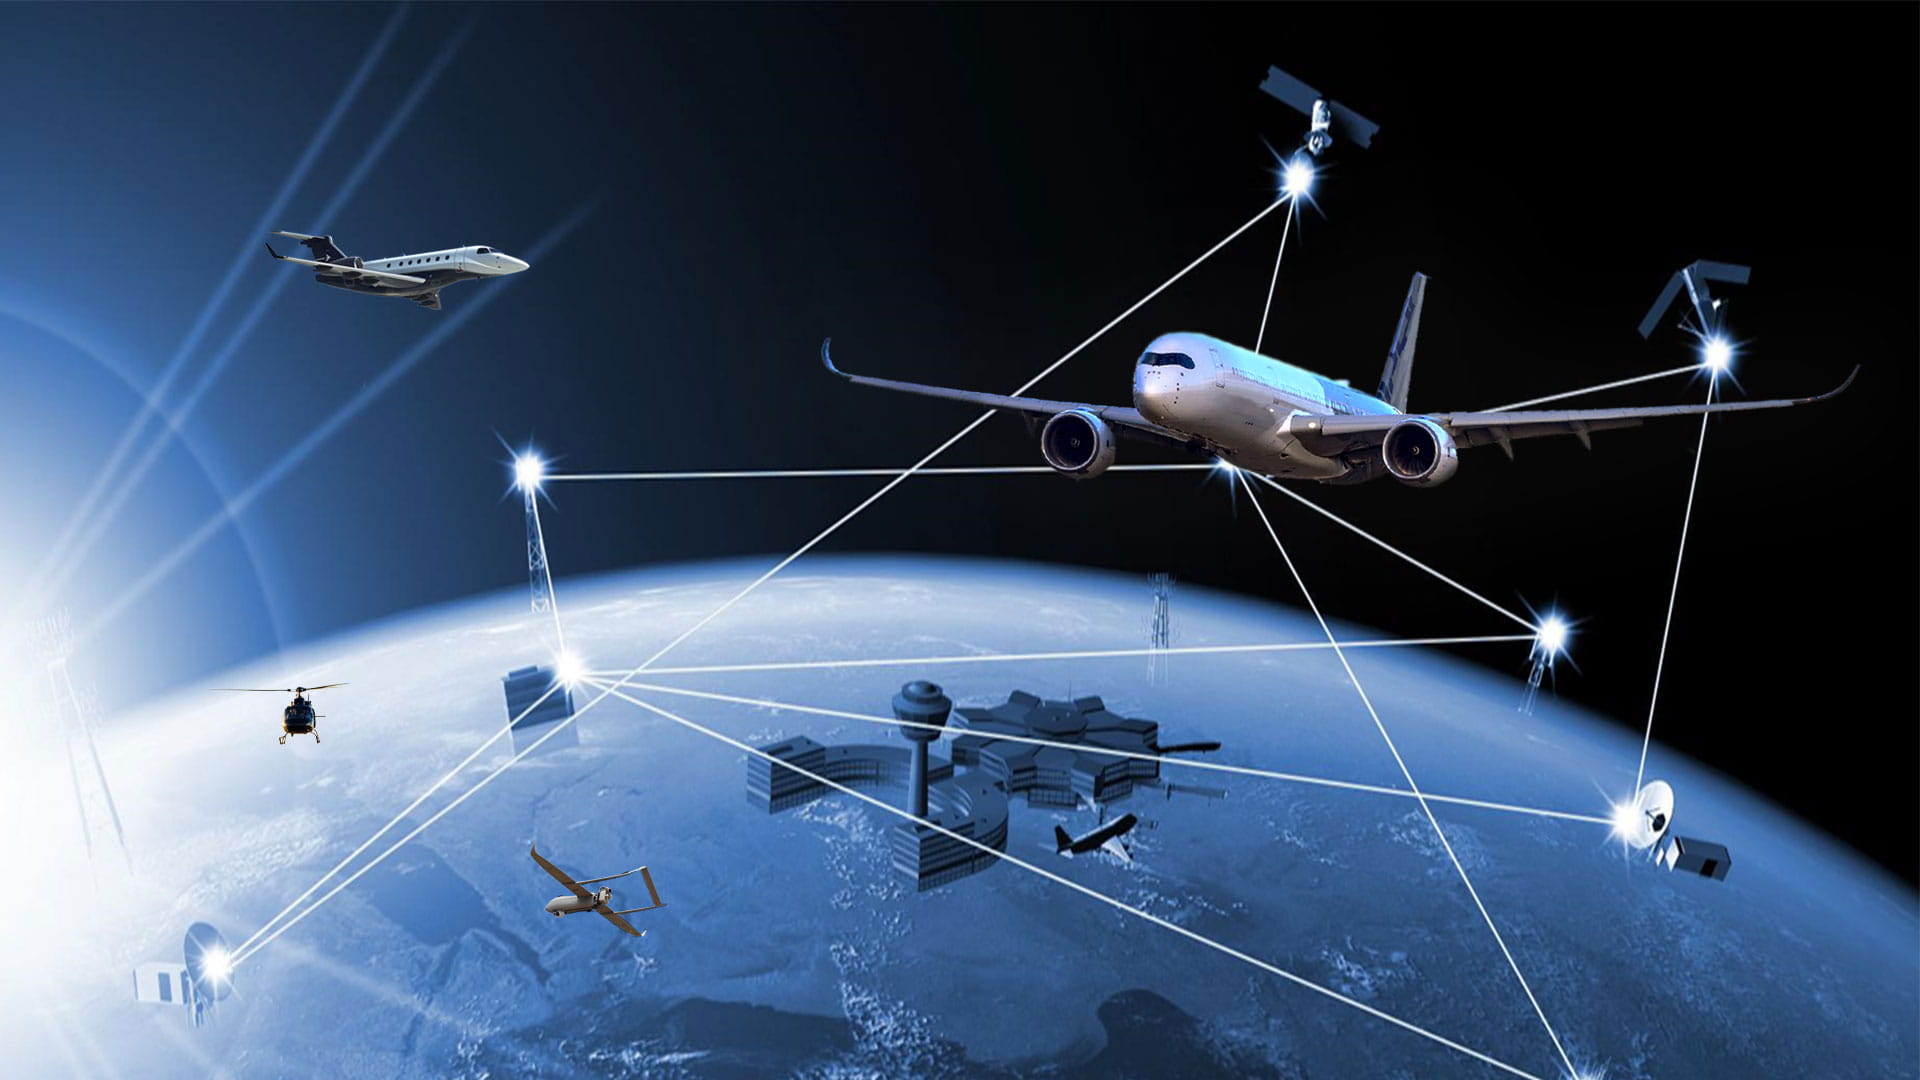 Global network of satellites